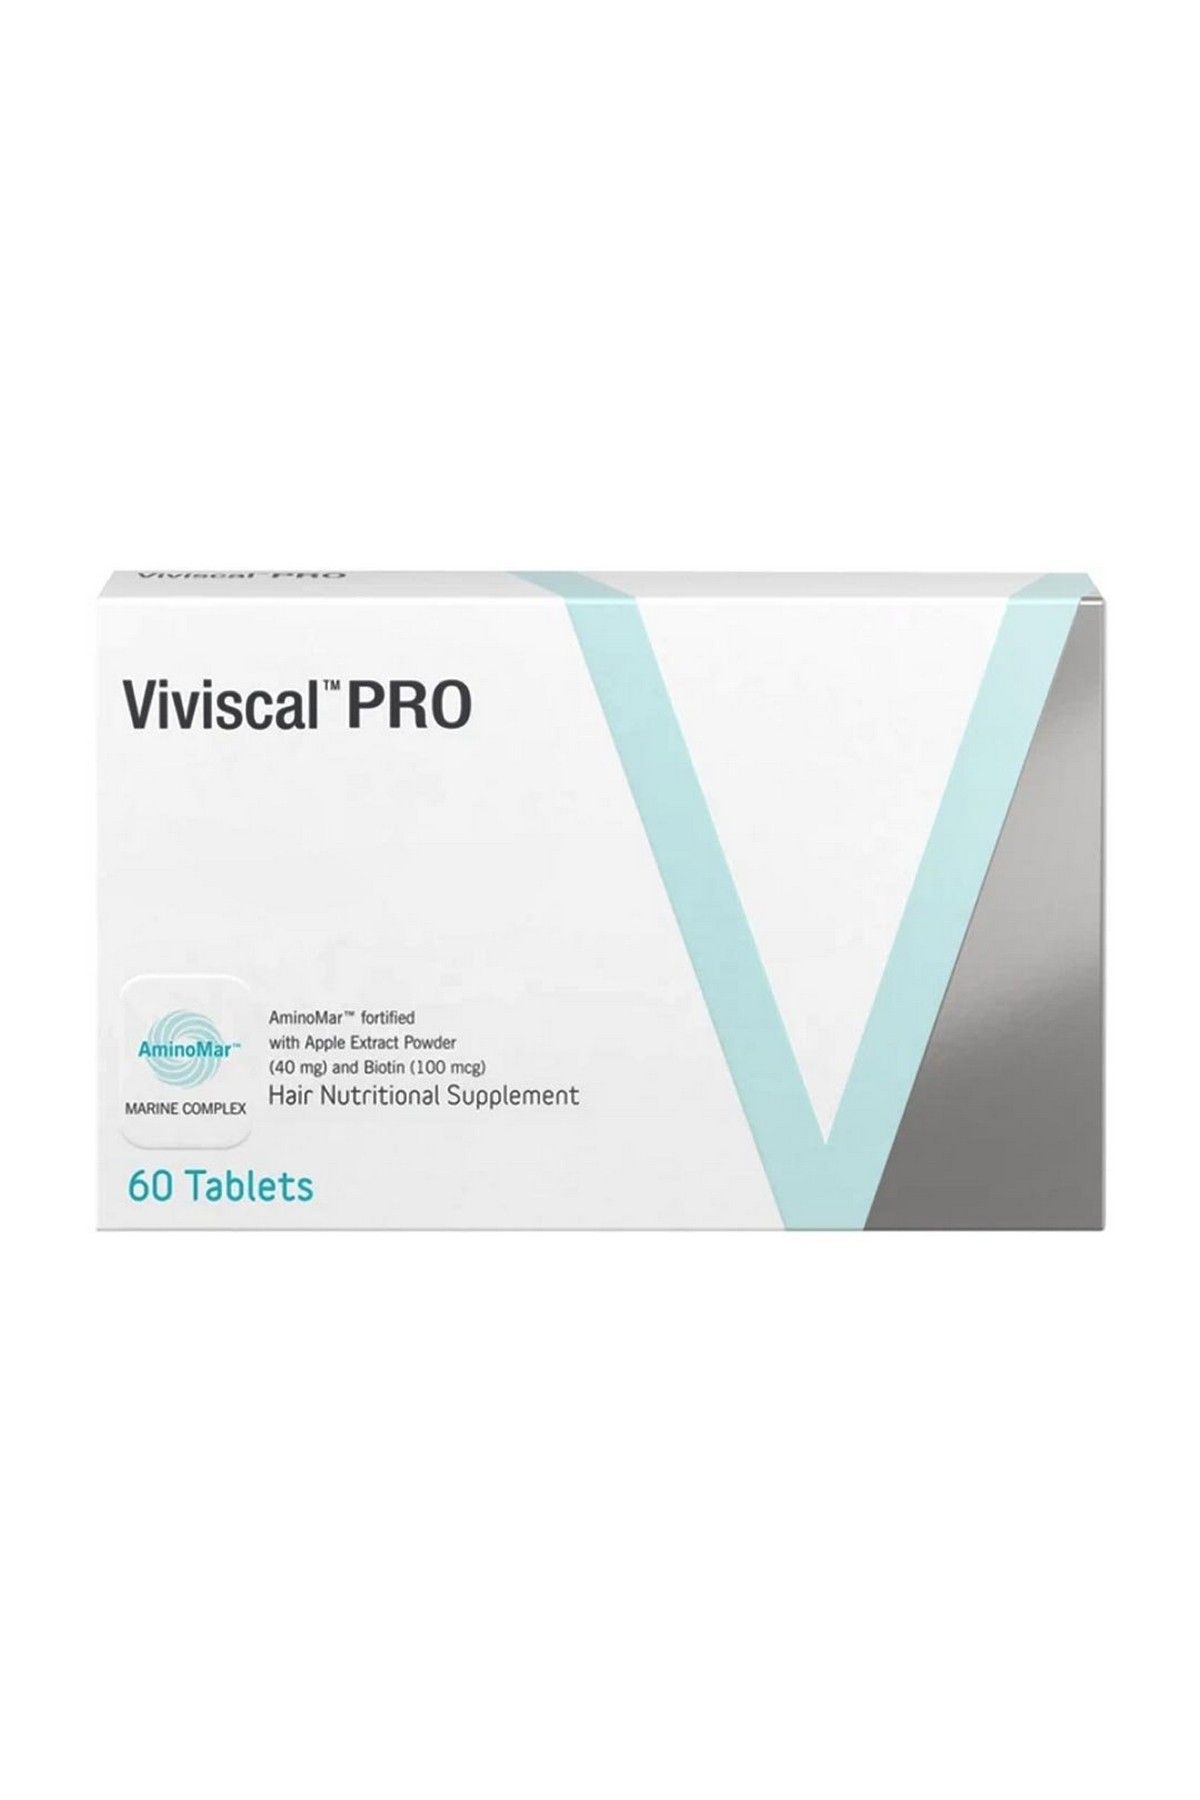 Viviscal - Professional Supplements Simp Asia (30/60Ct)